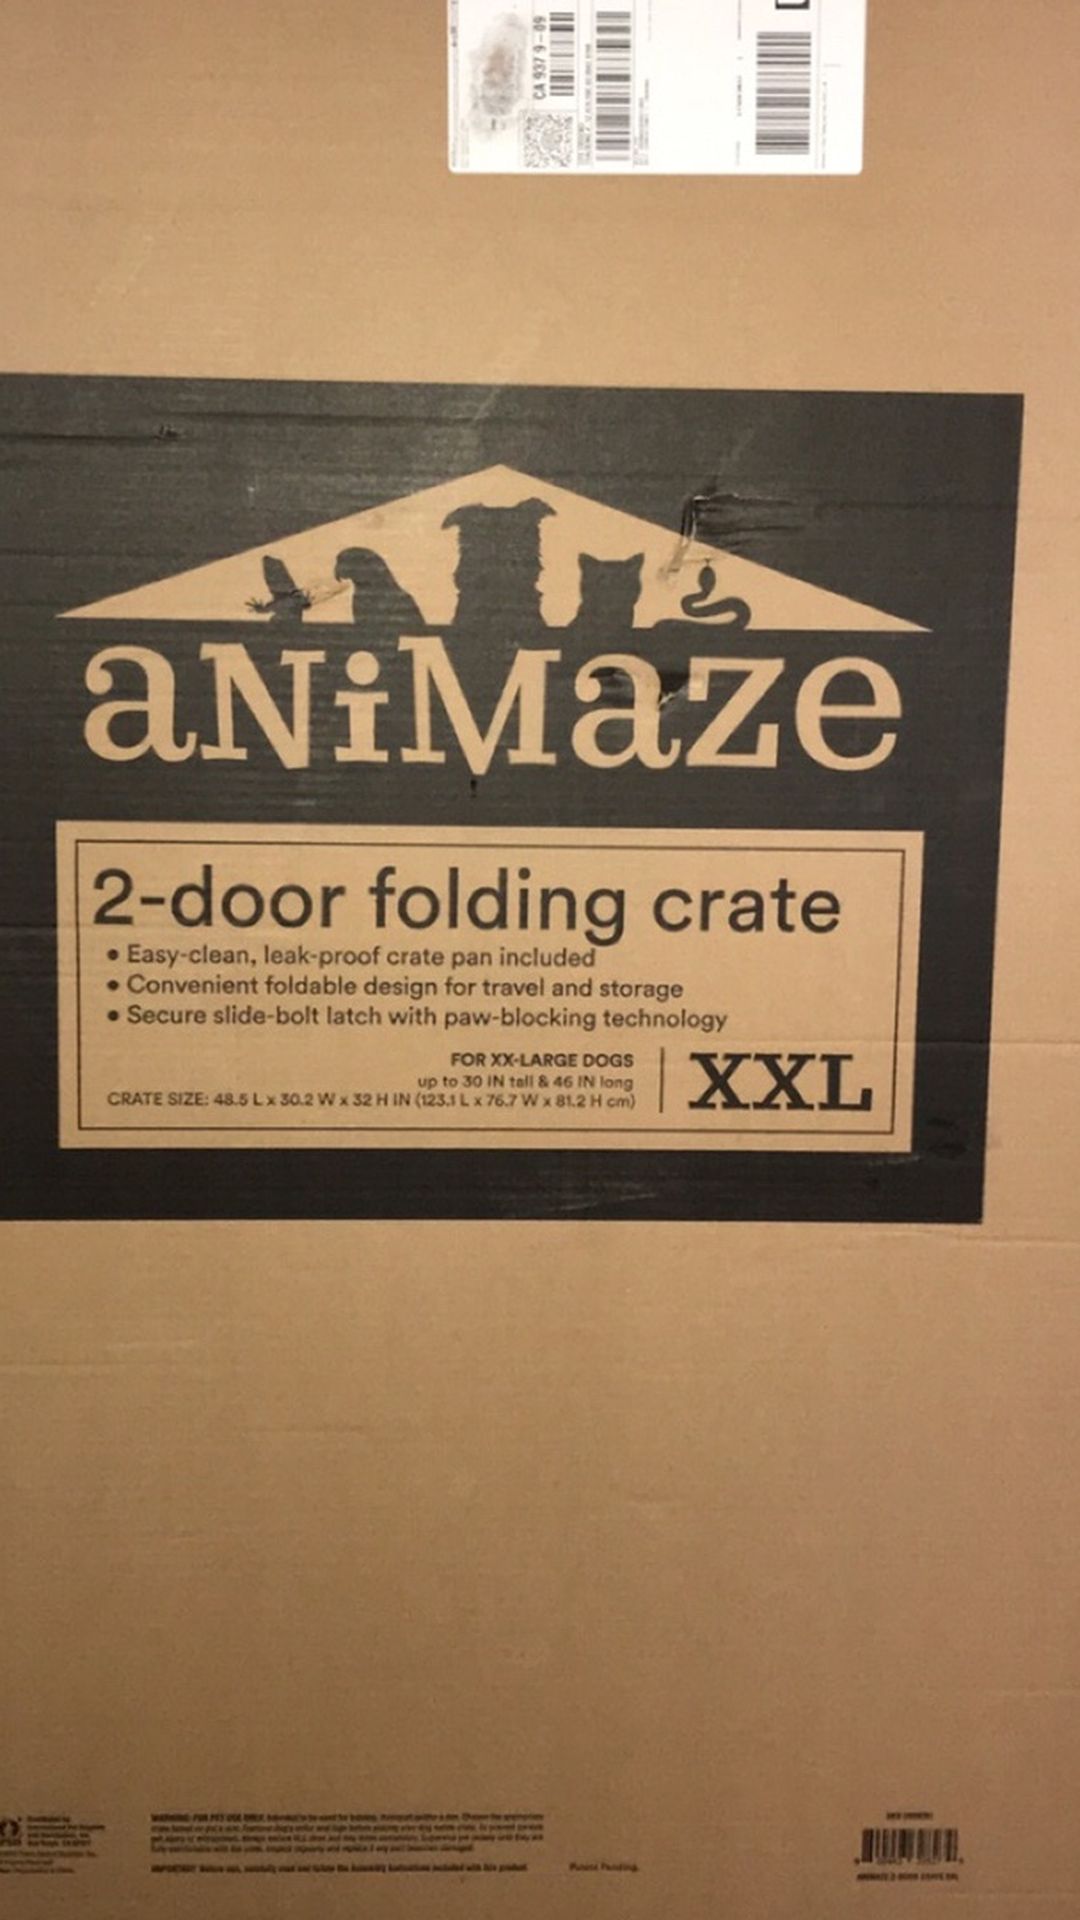 XXL Dog crate